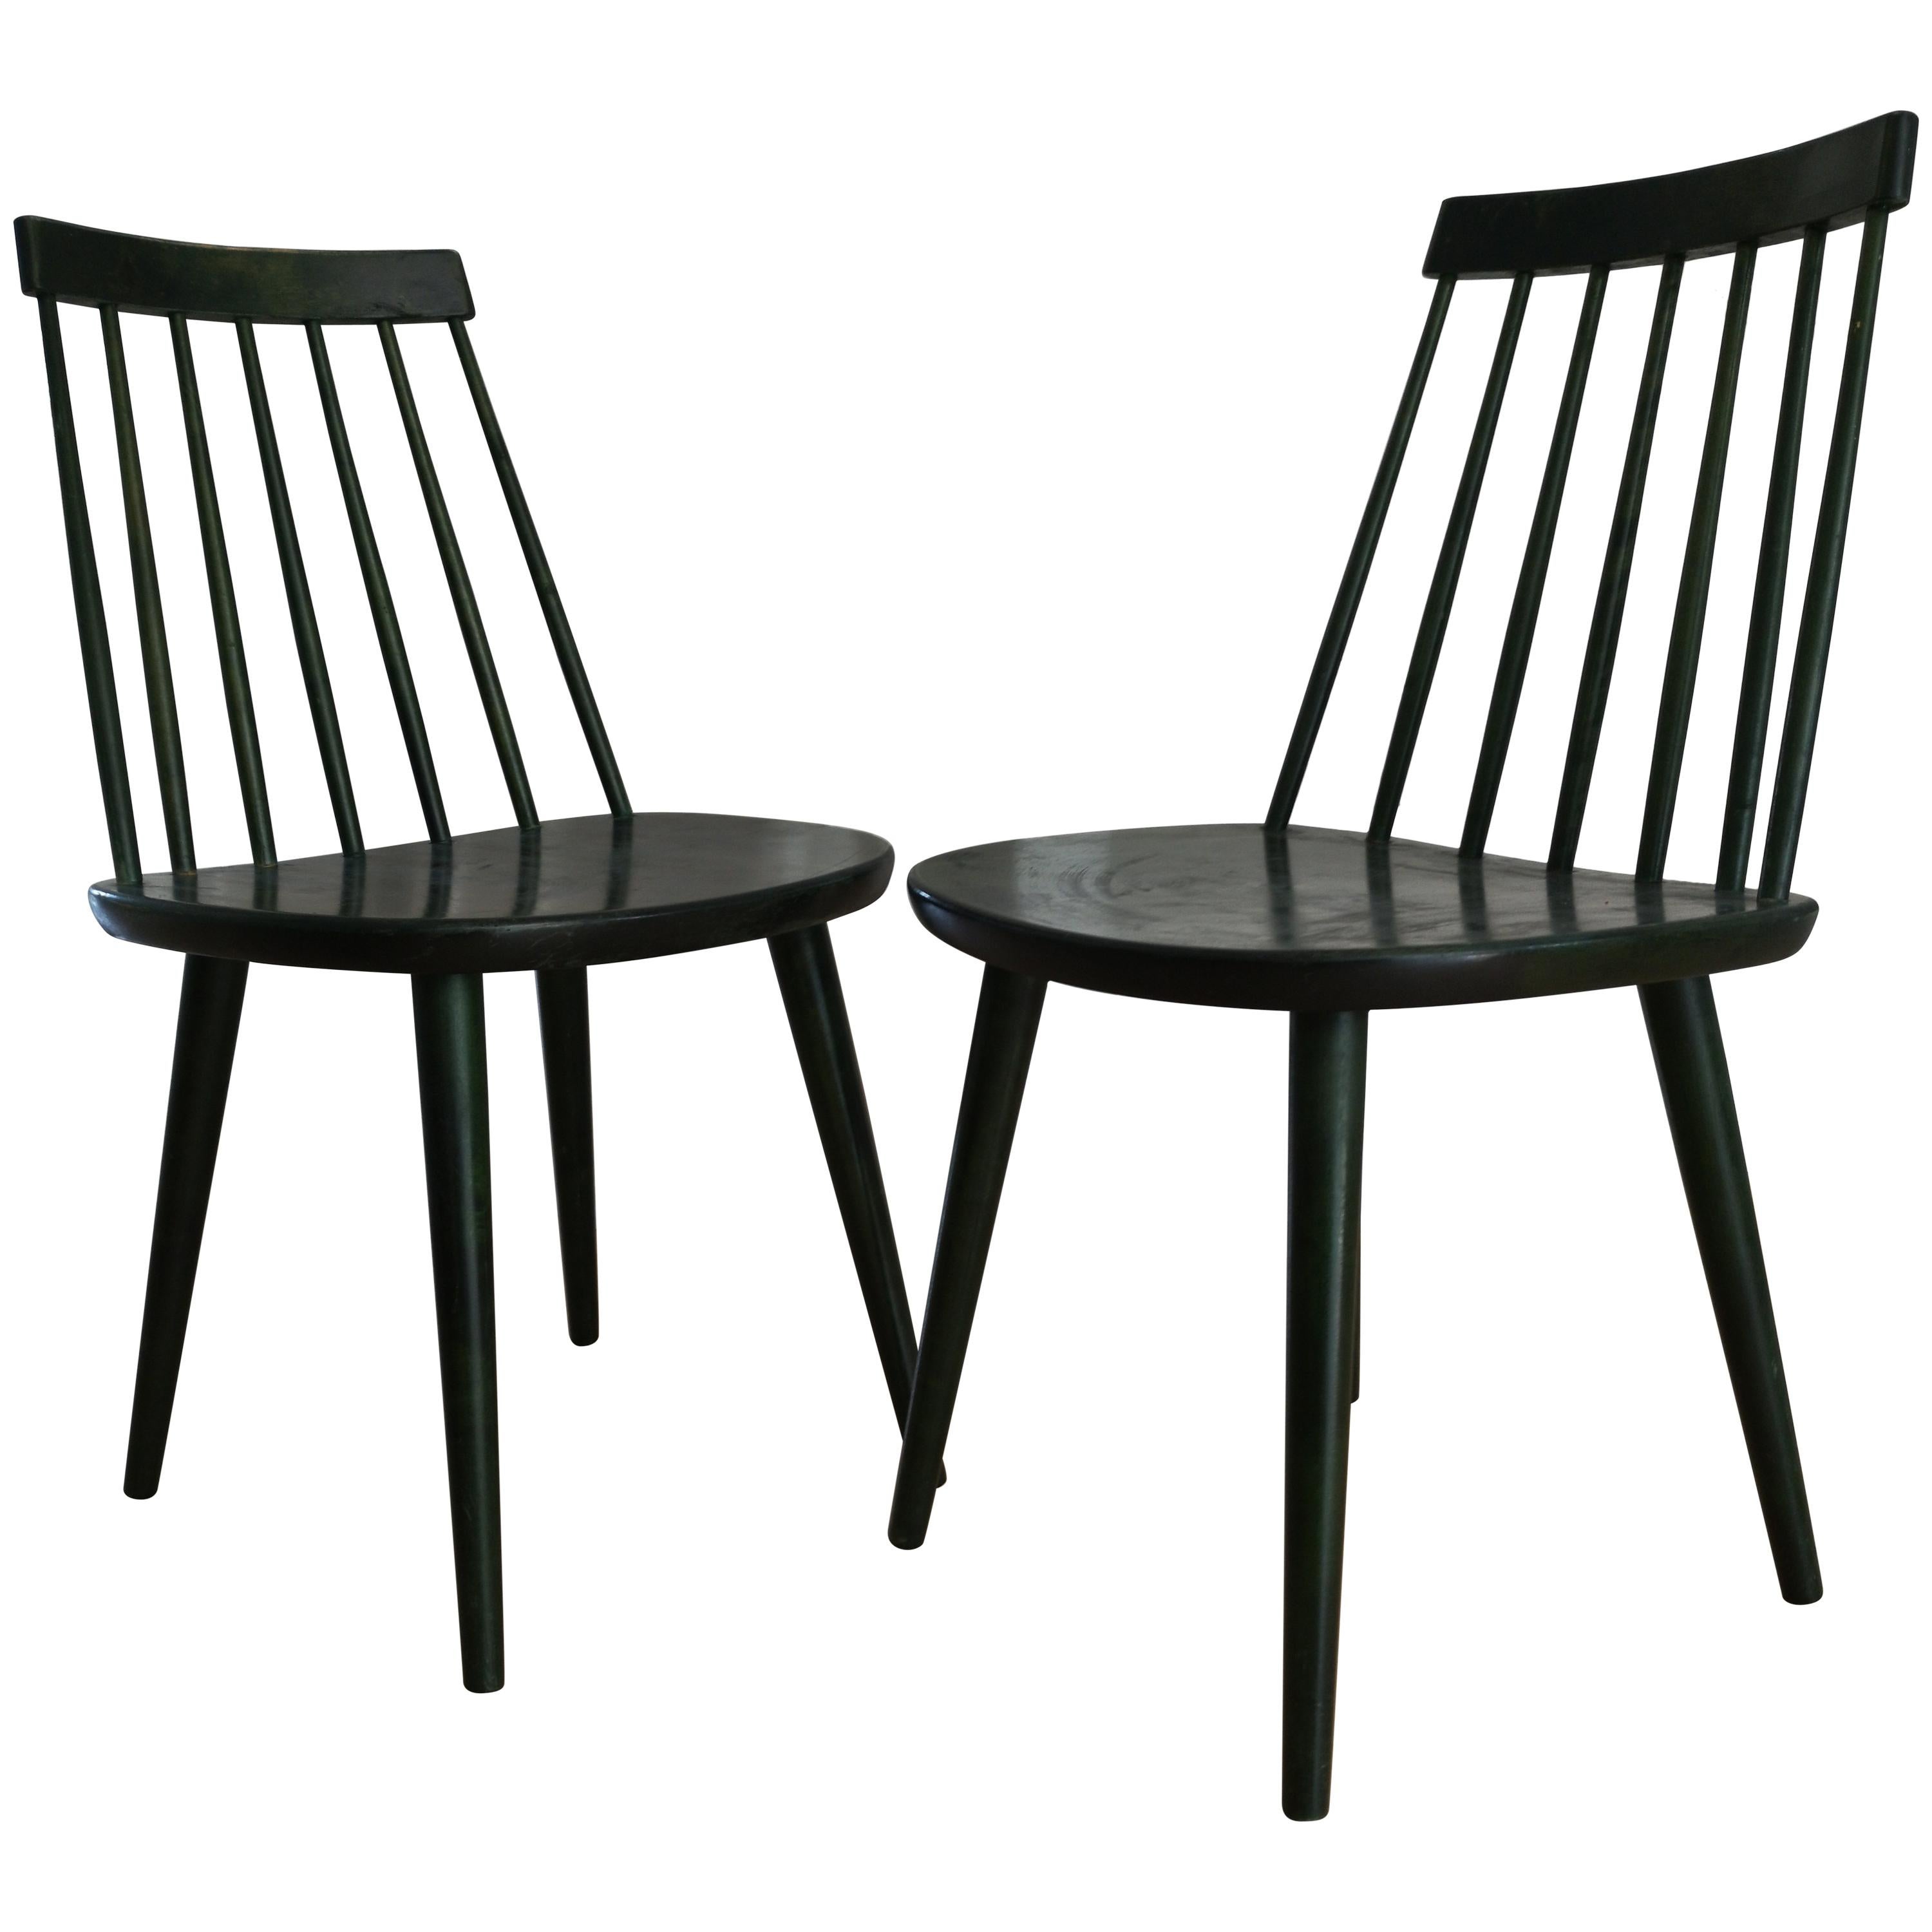 Swedish Midcentury Pinnockio Spindle Back Birch Dining Chairs by Yngve Ekström